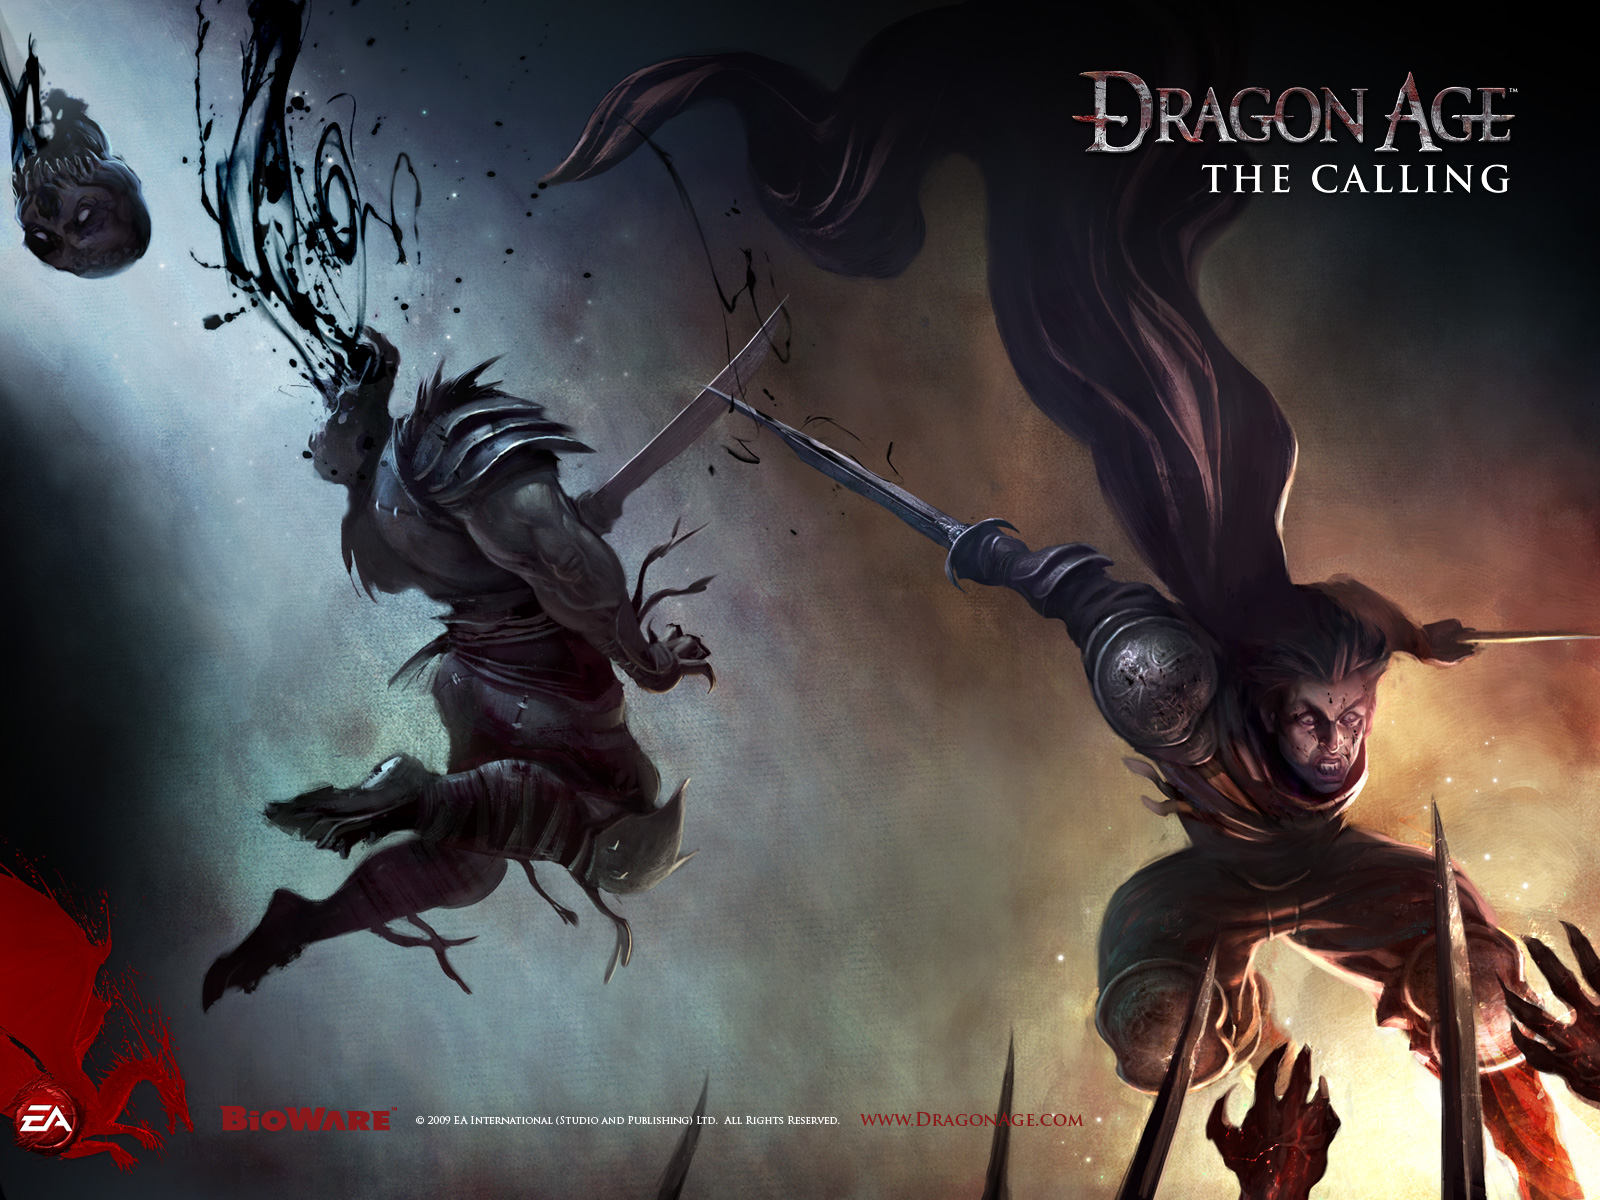 download dragon age origins free pc game full version all dlc